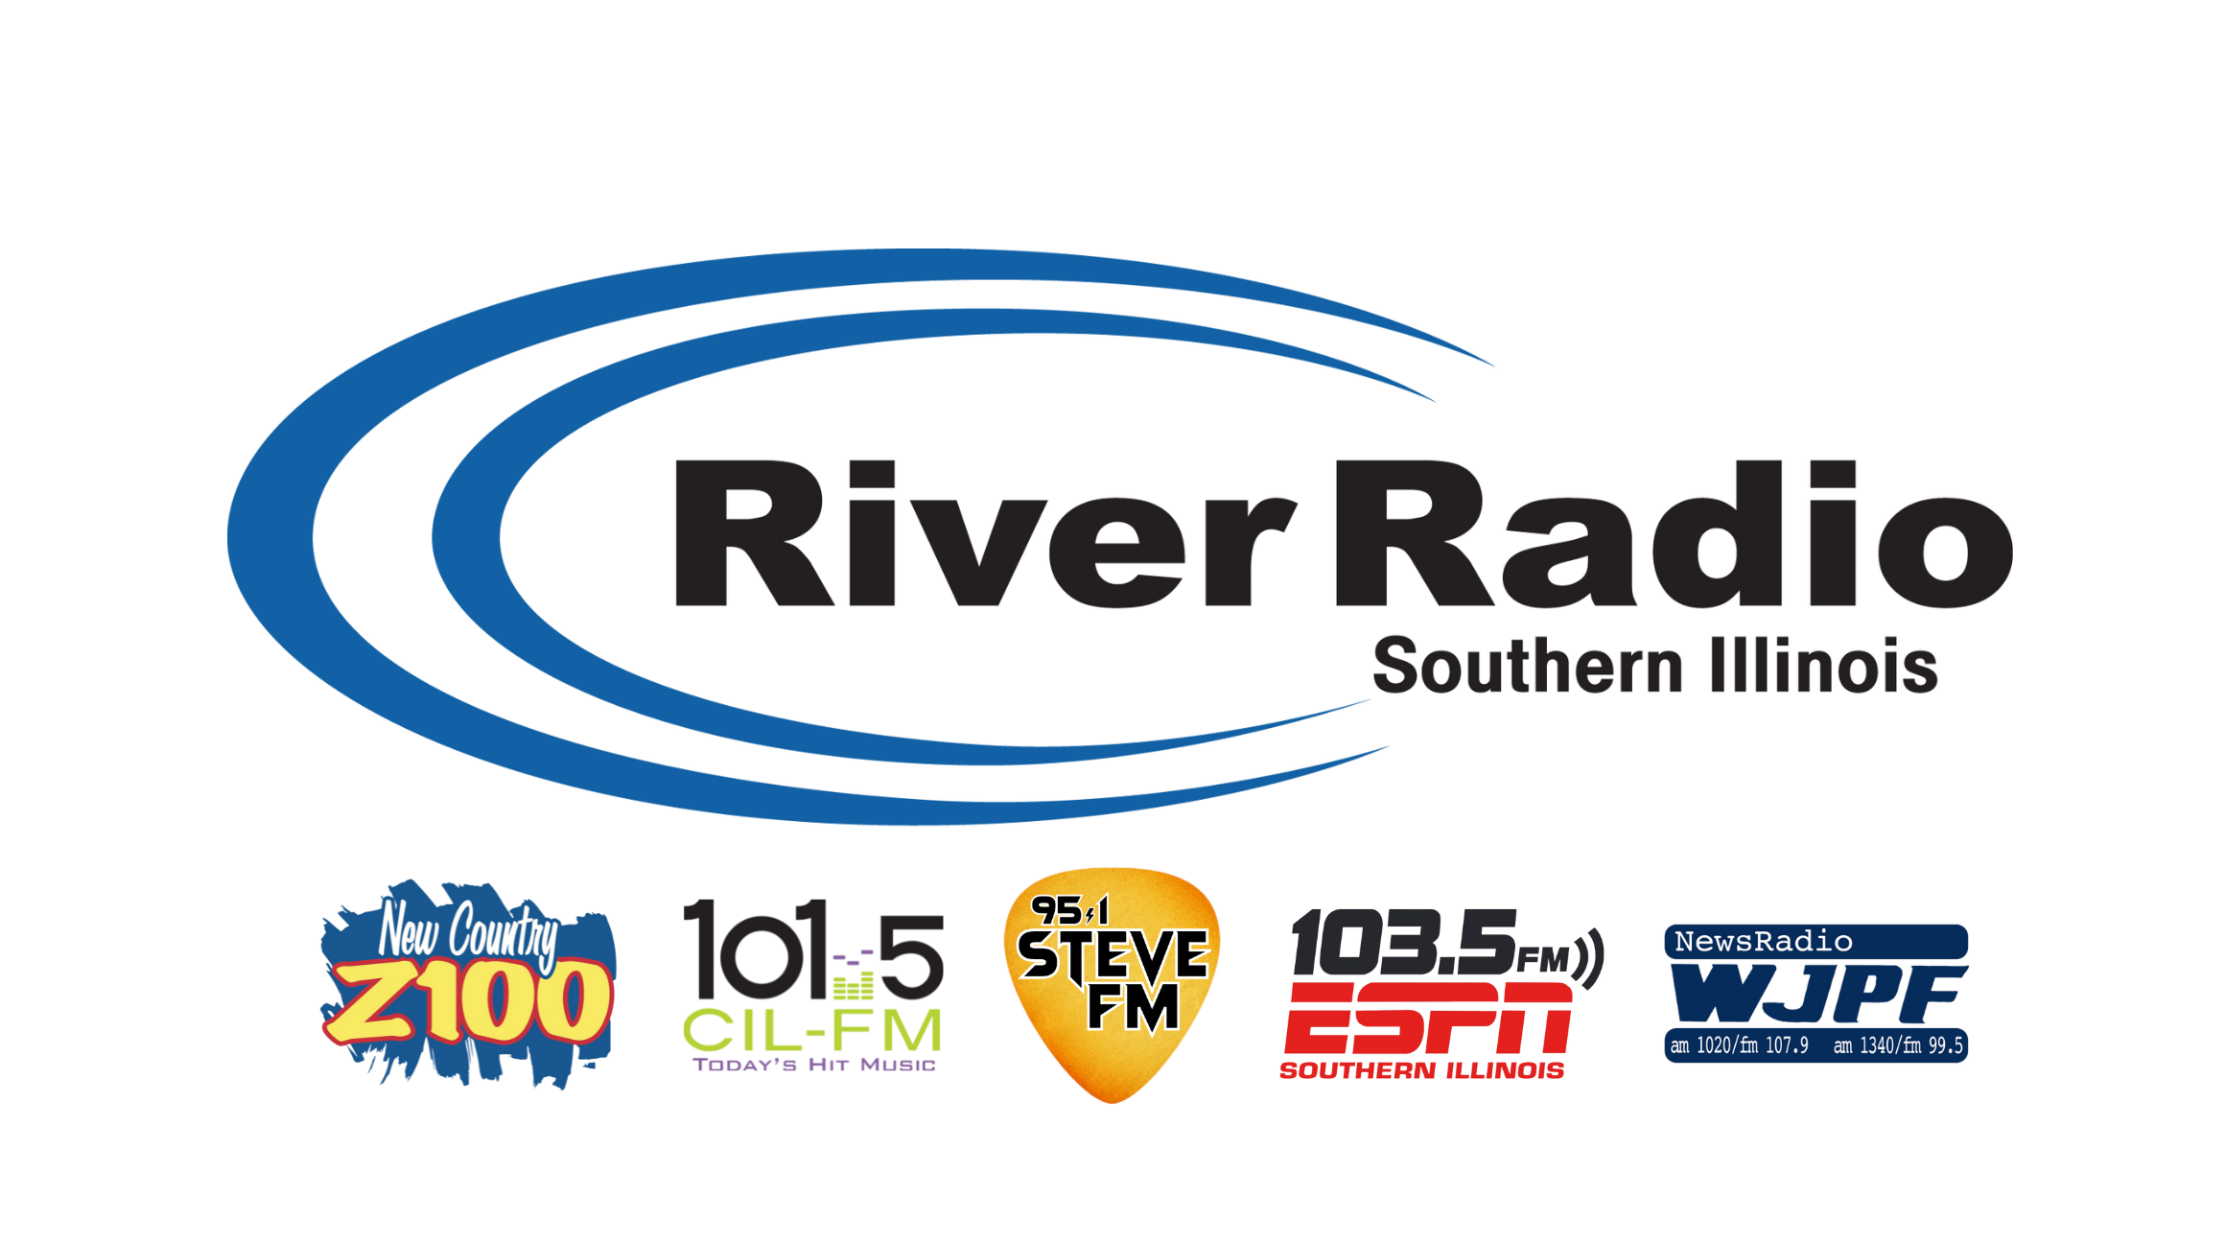 River Radio